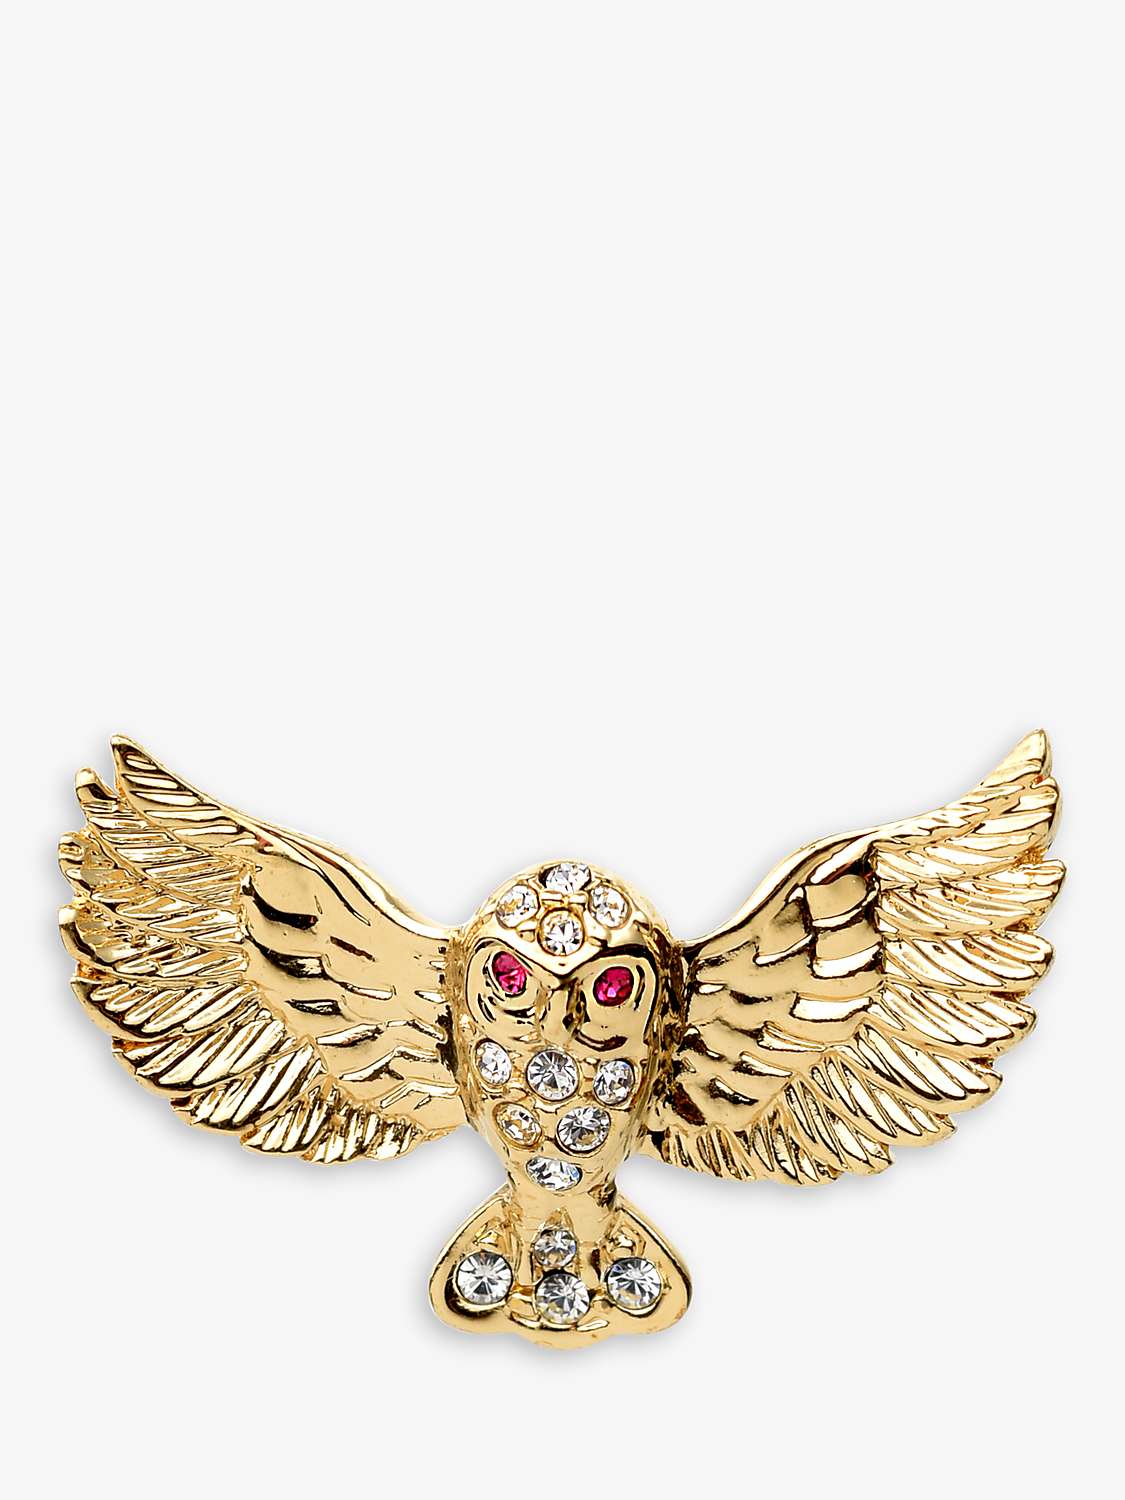 Buy Eclectica Vintage Attwood & Sawyer Swarovski Crystal Flying Owl Brooch, Dated Circa 1990s Online at johnlewis.com